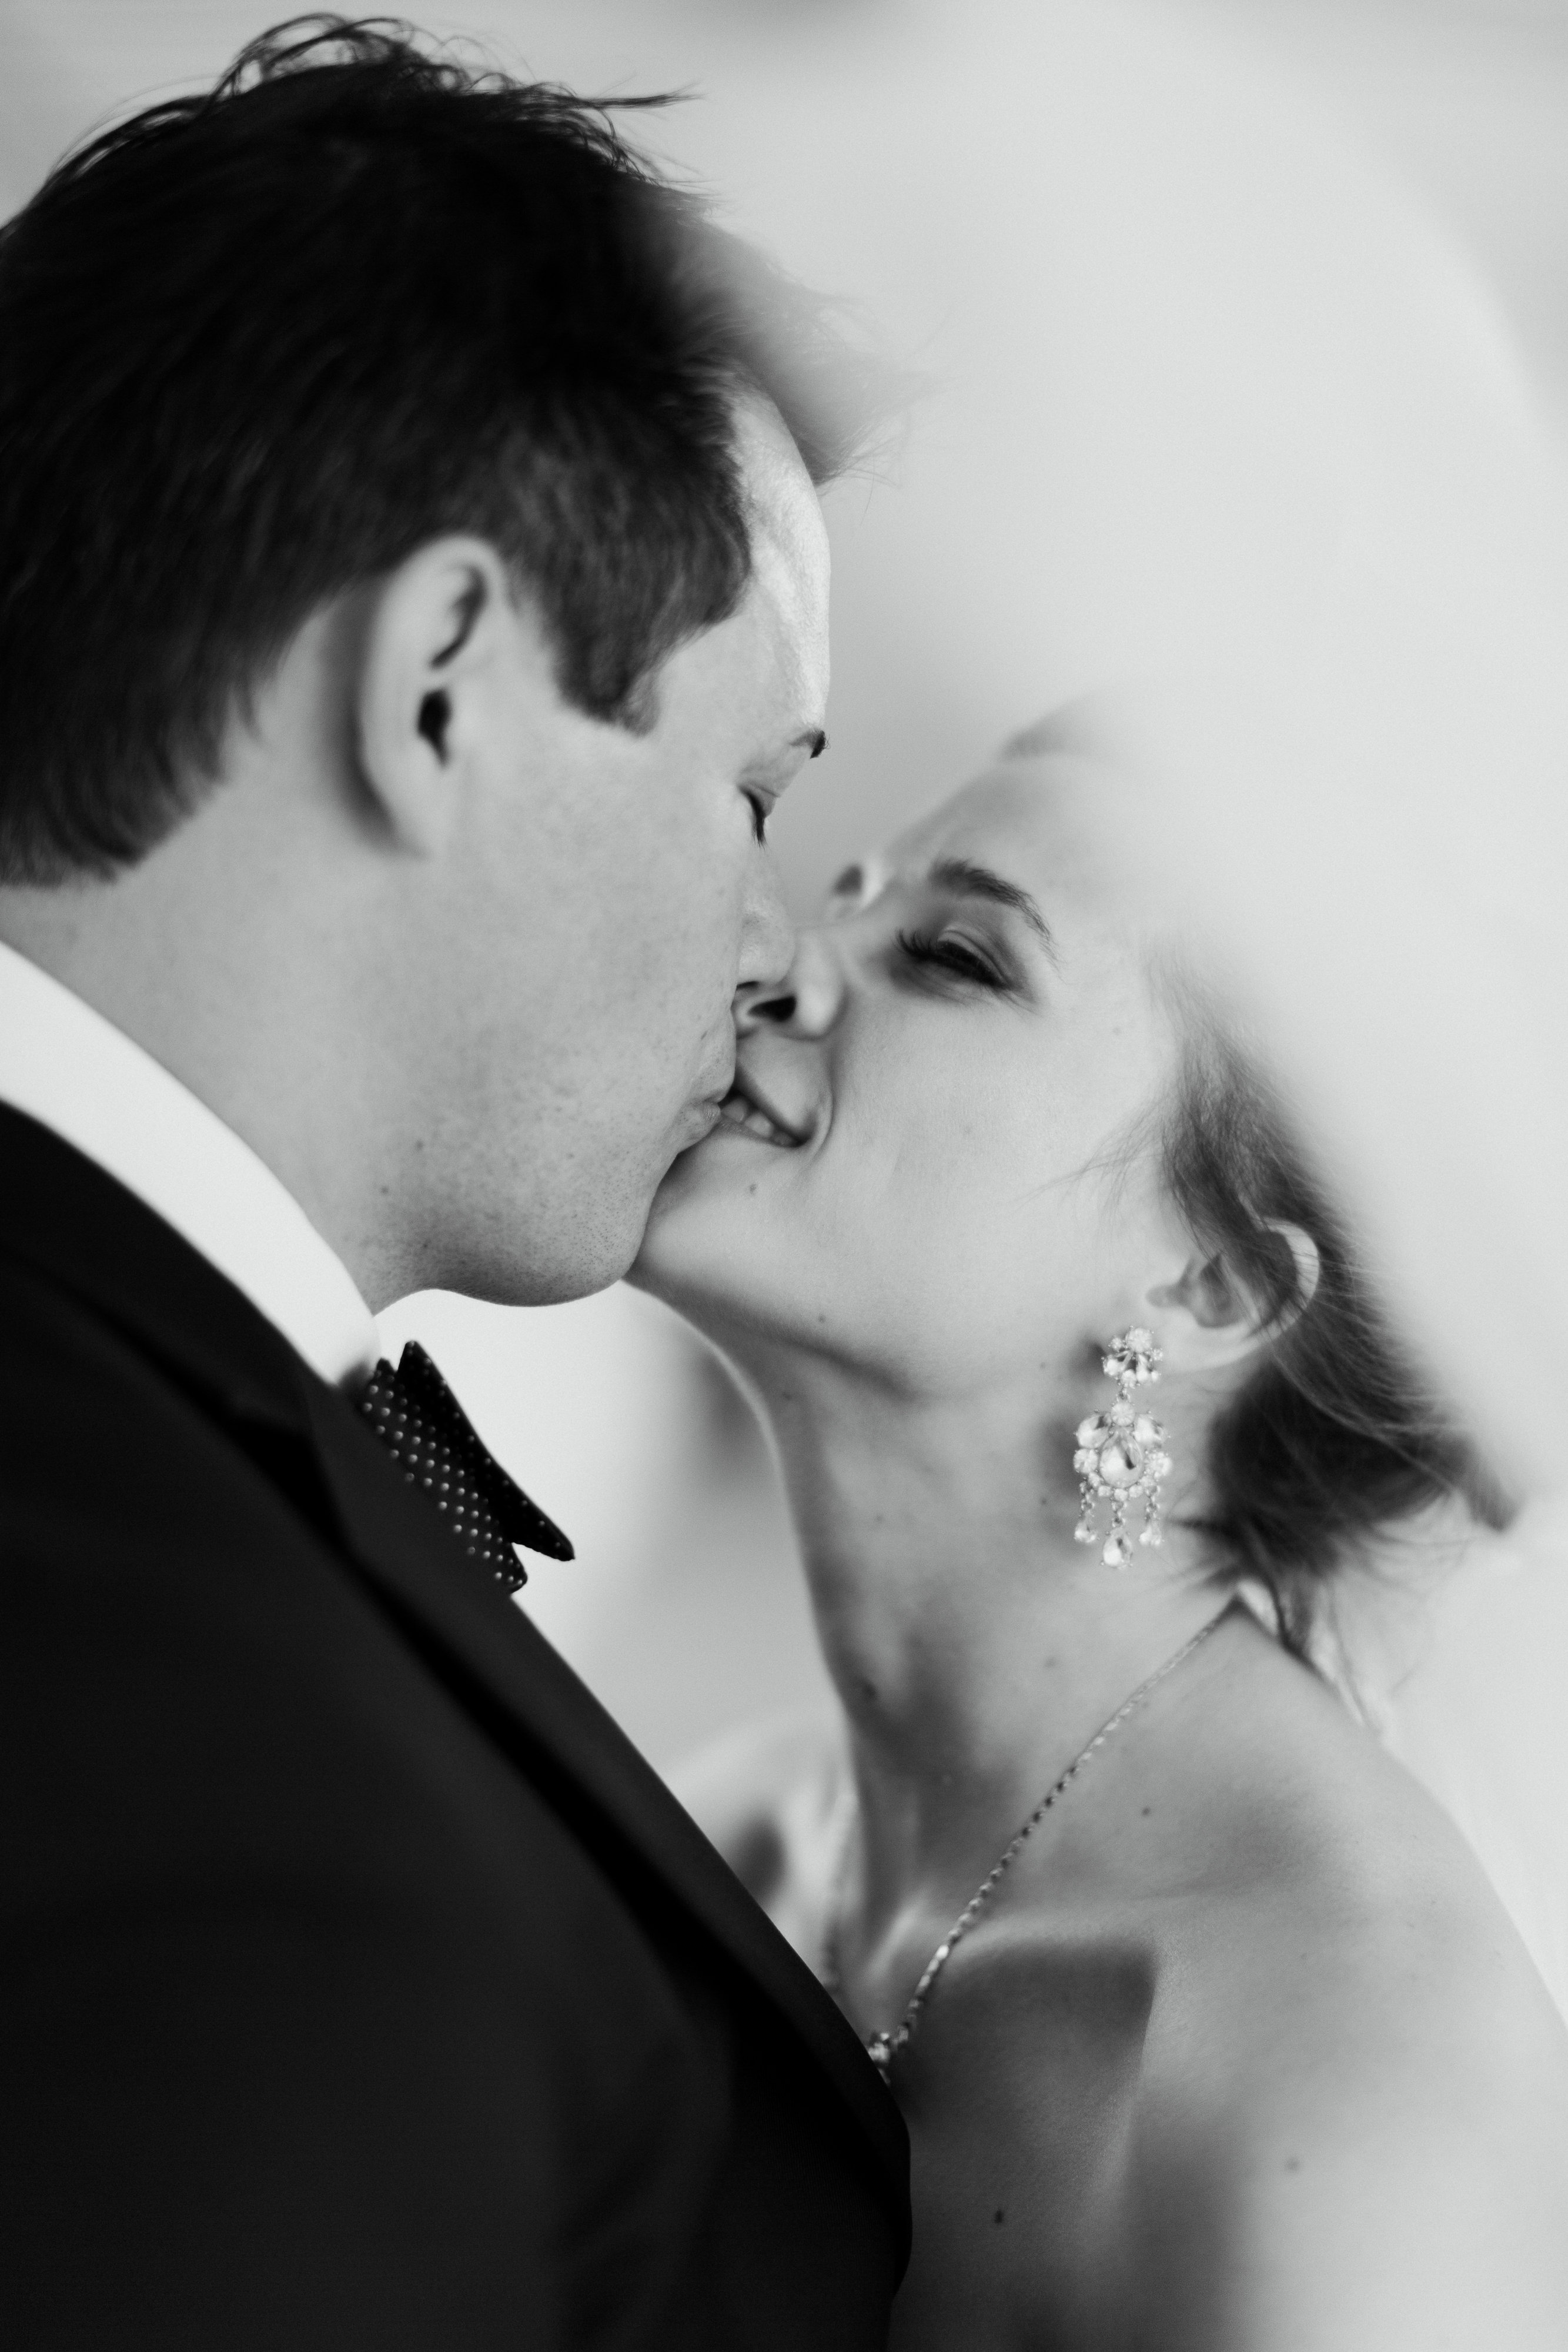 couples kiss under veil at romantic cleveland wedding